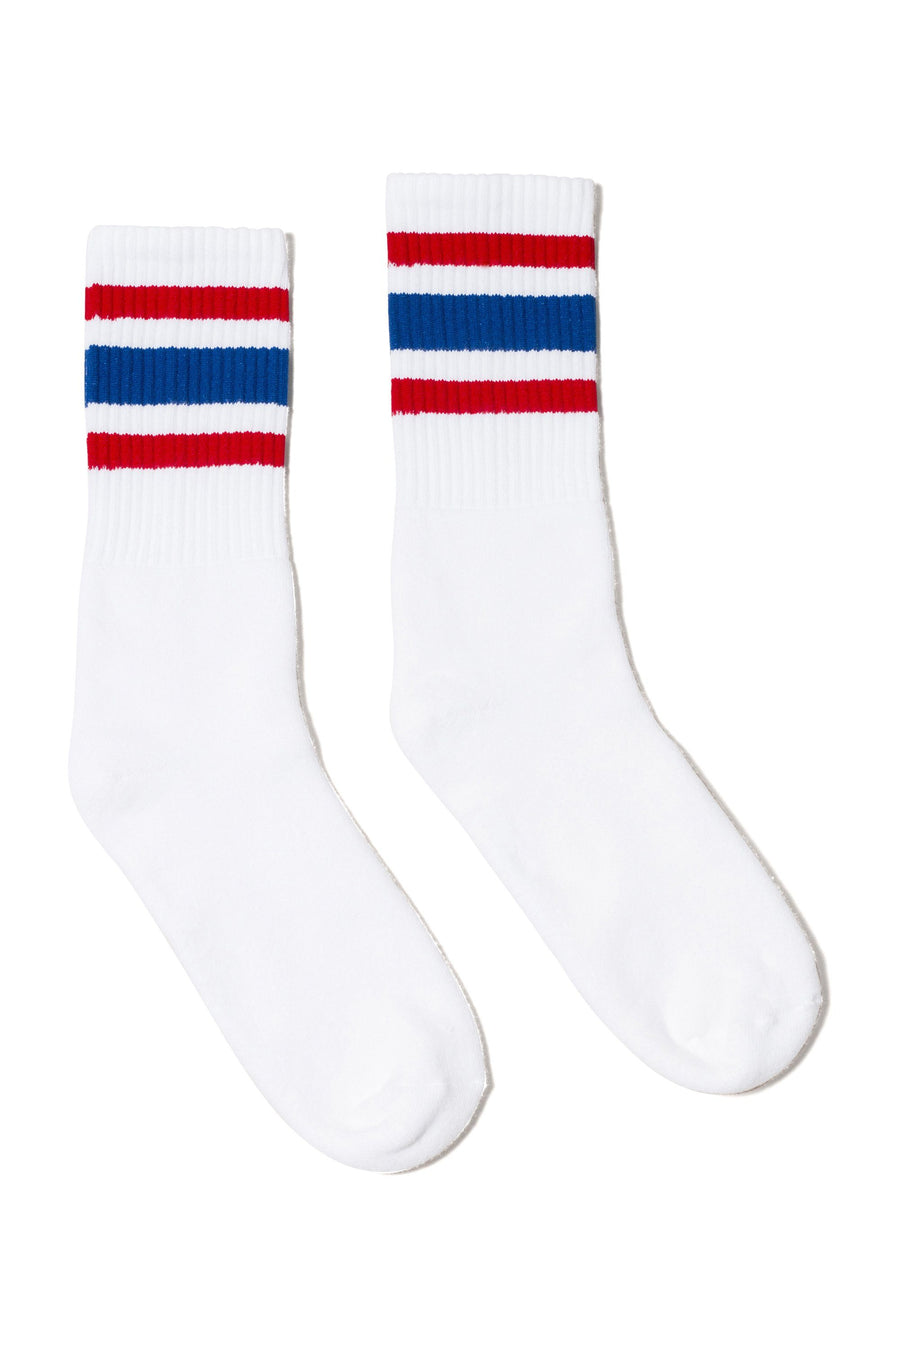 SOCCO All American Sock